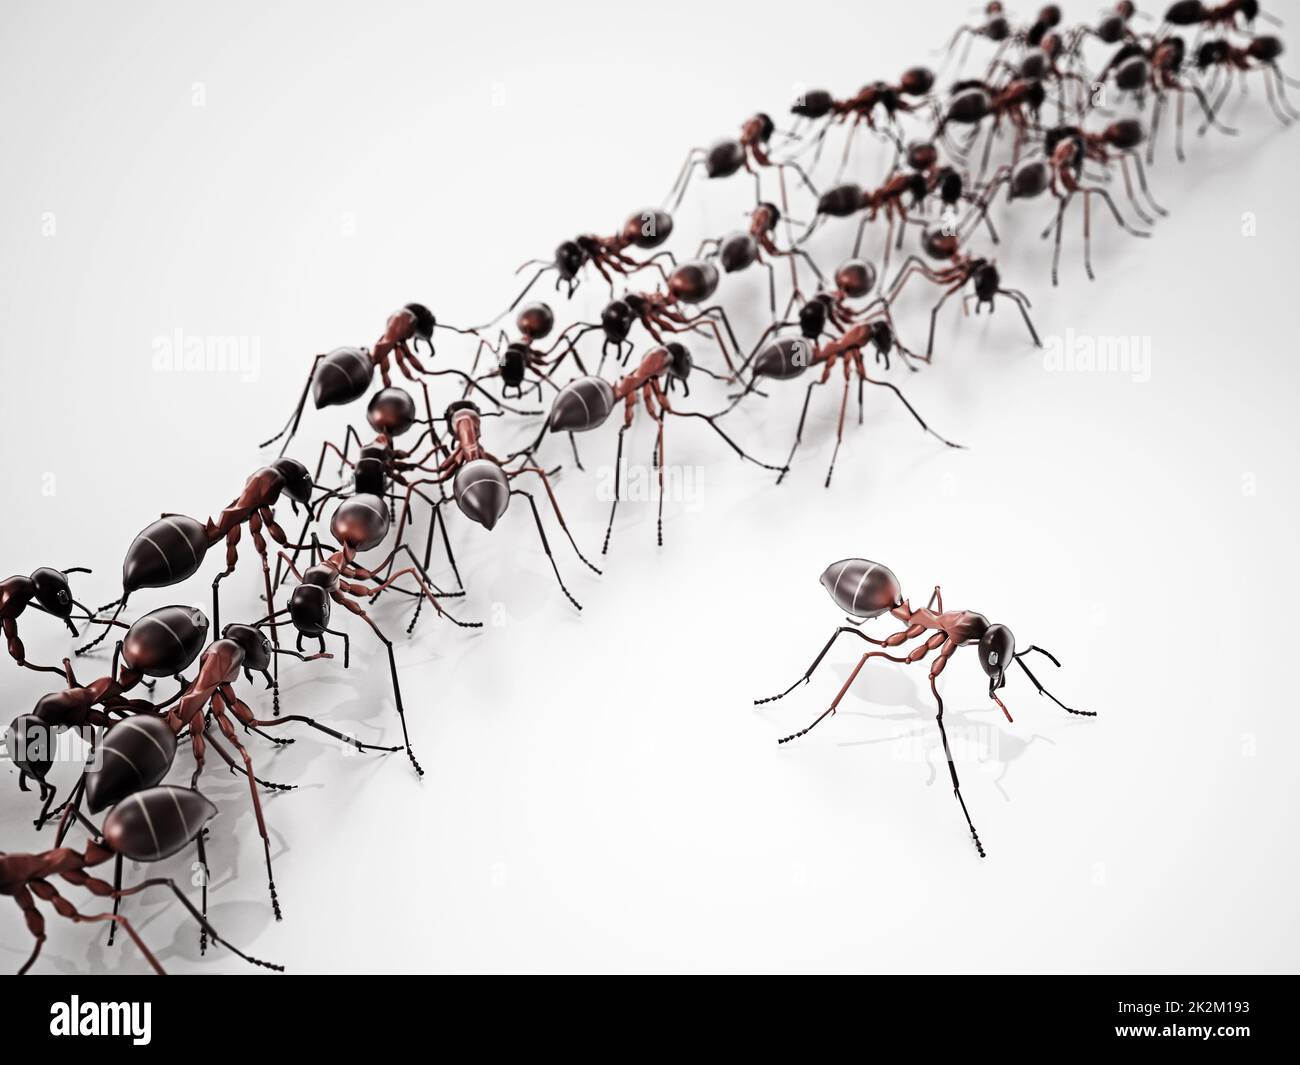 https://c8.alamy.com/comp/2K2M193/3d-illustration-of-walking-ants-top-view-3d-illustration-2K2M193.jpg